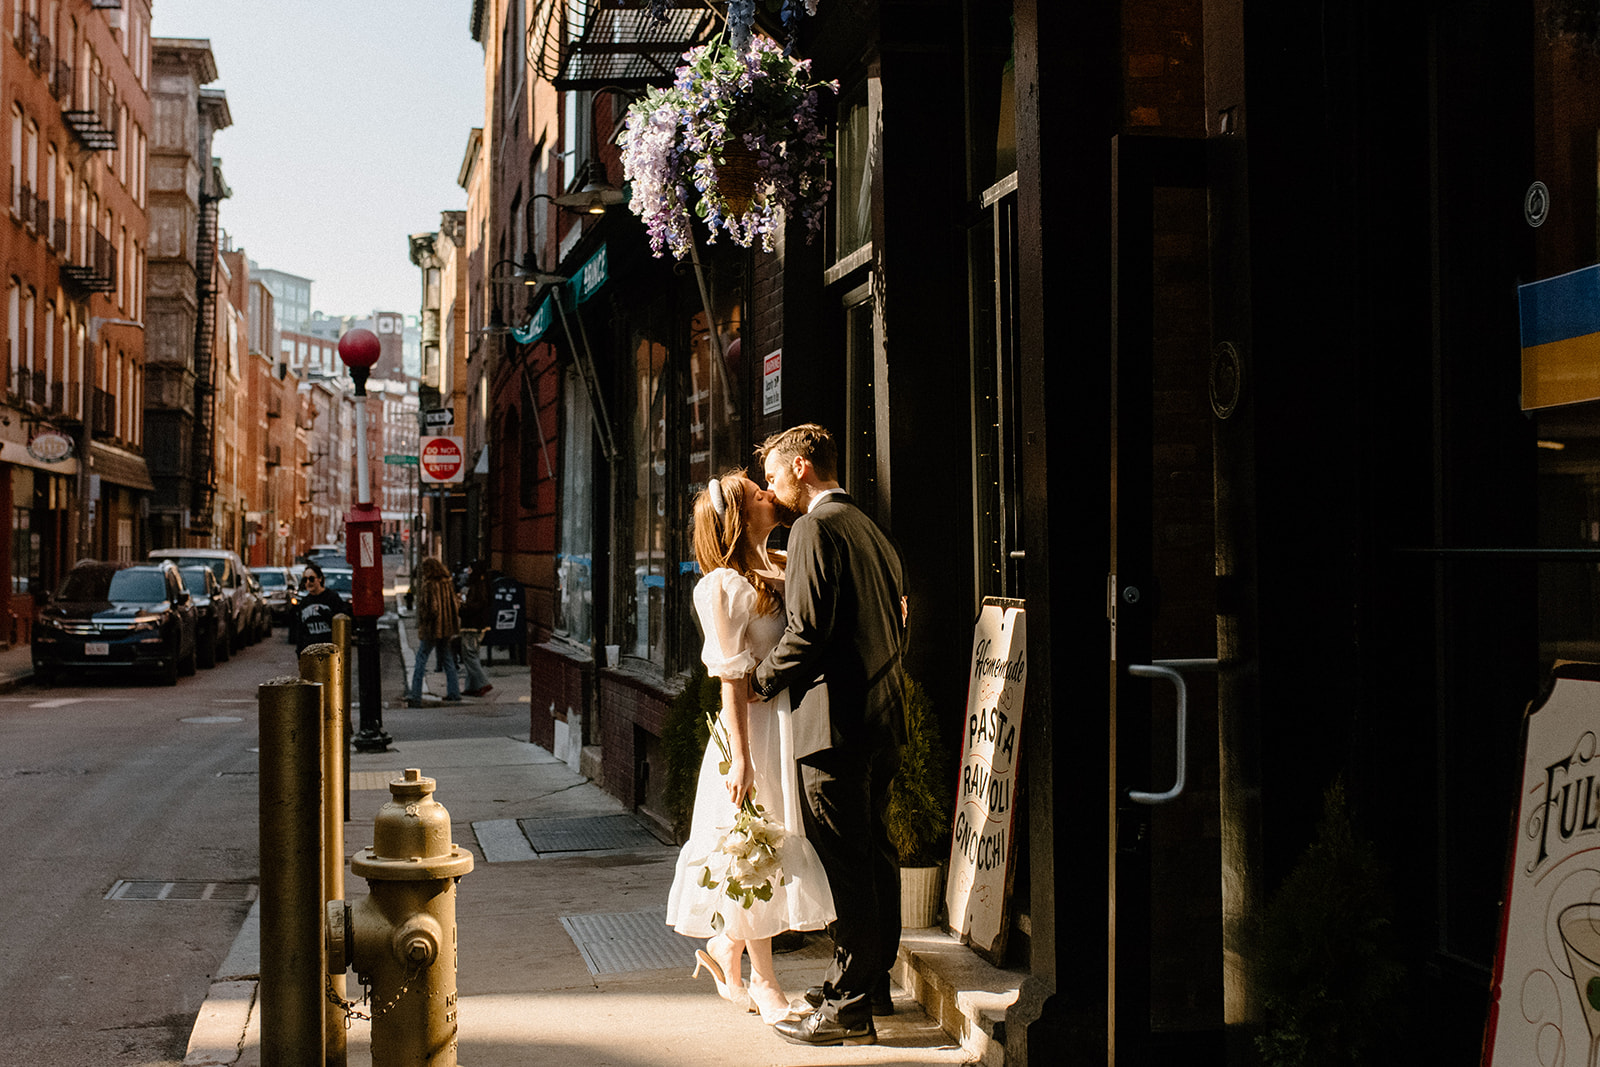 A wedding In downtown Boston